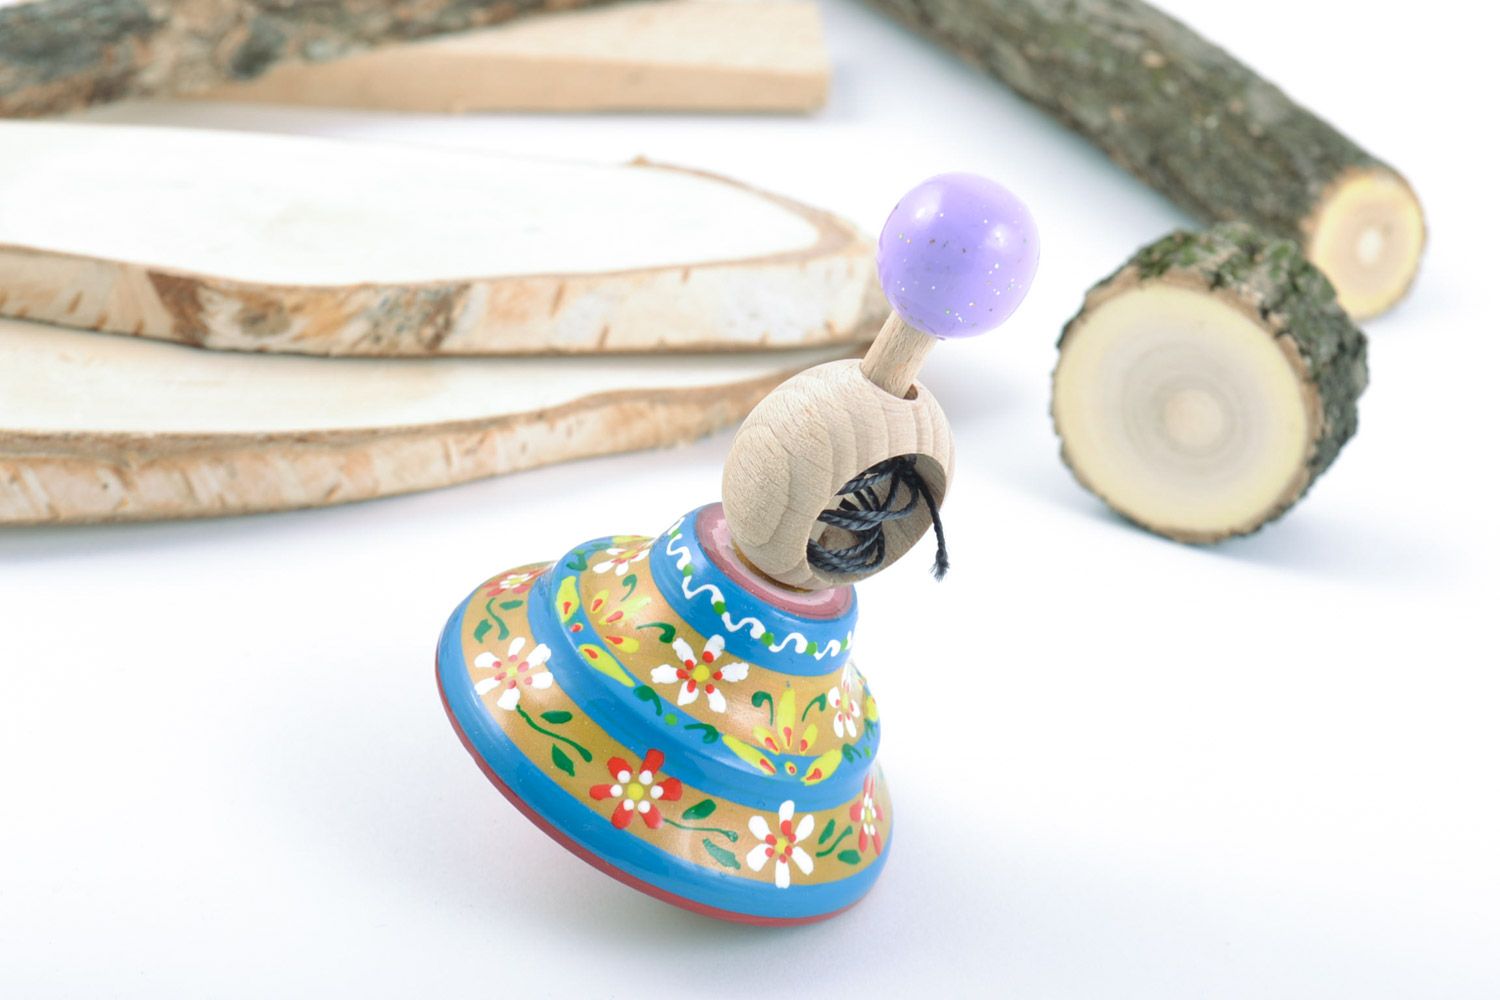 Trompo de madera artesanal juguete para niños pintado con tintes ecológicos  foto 2